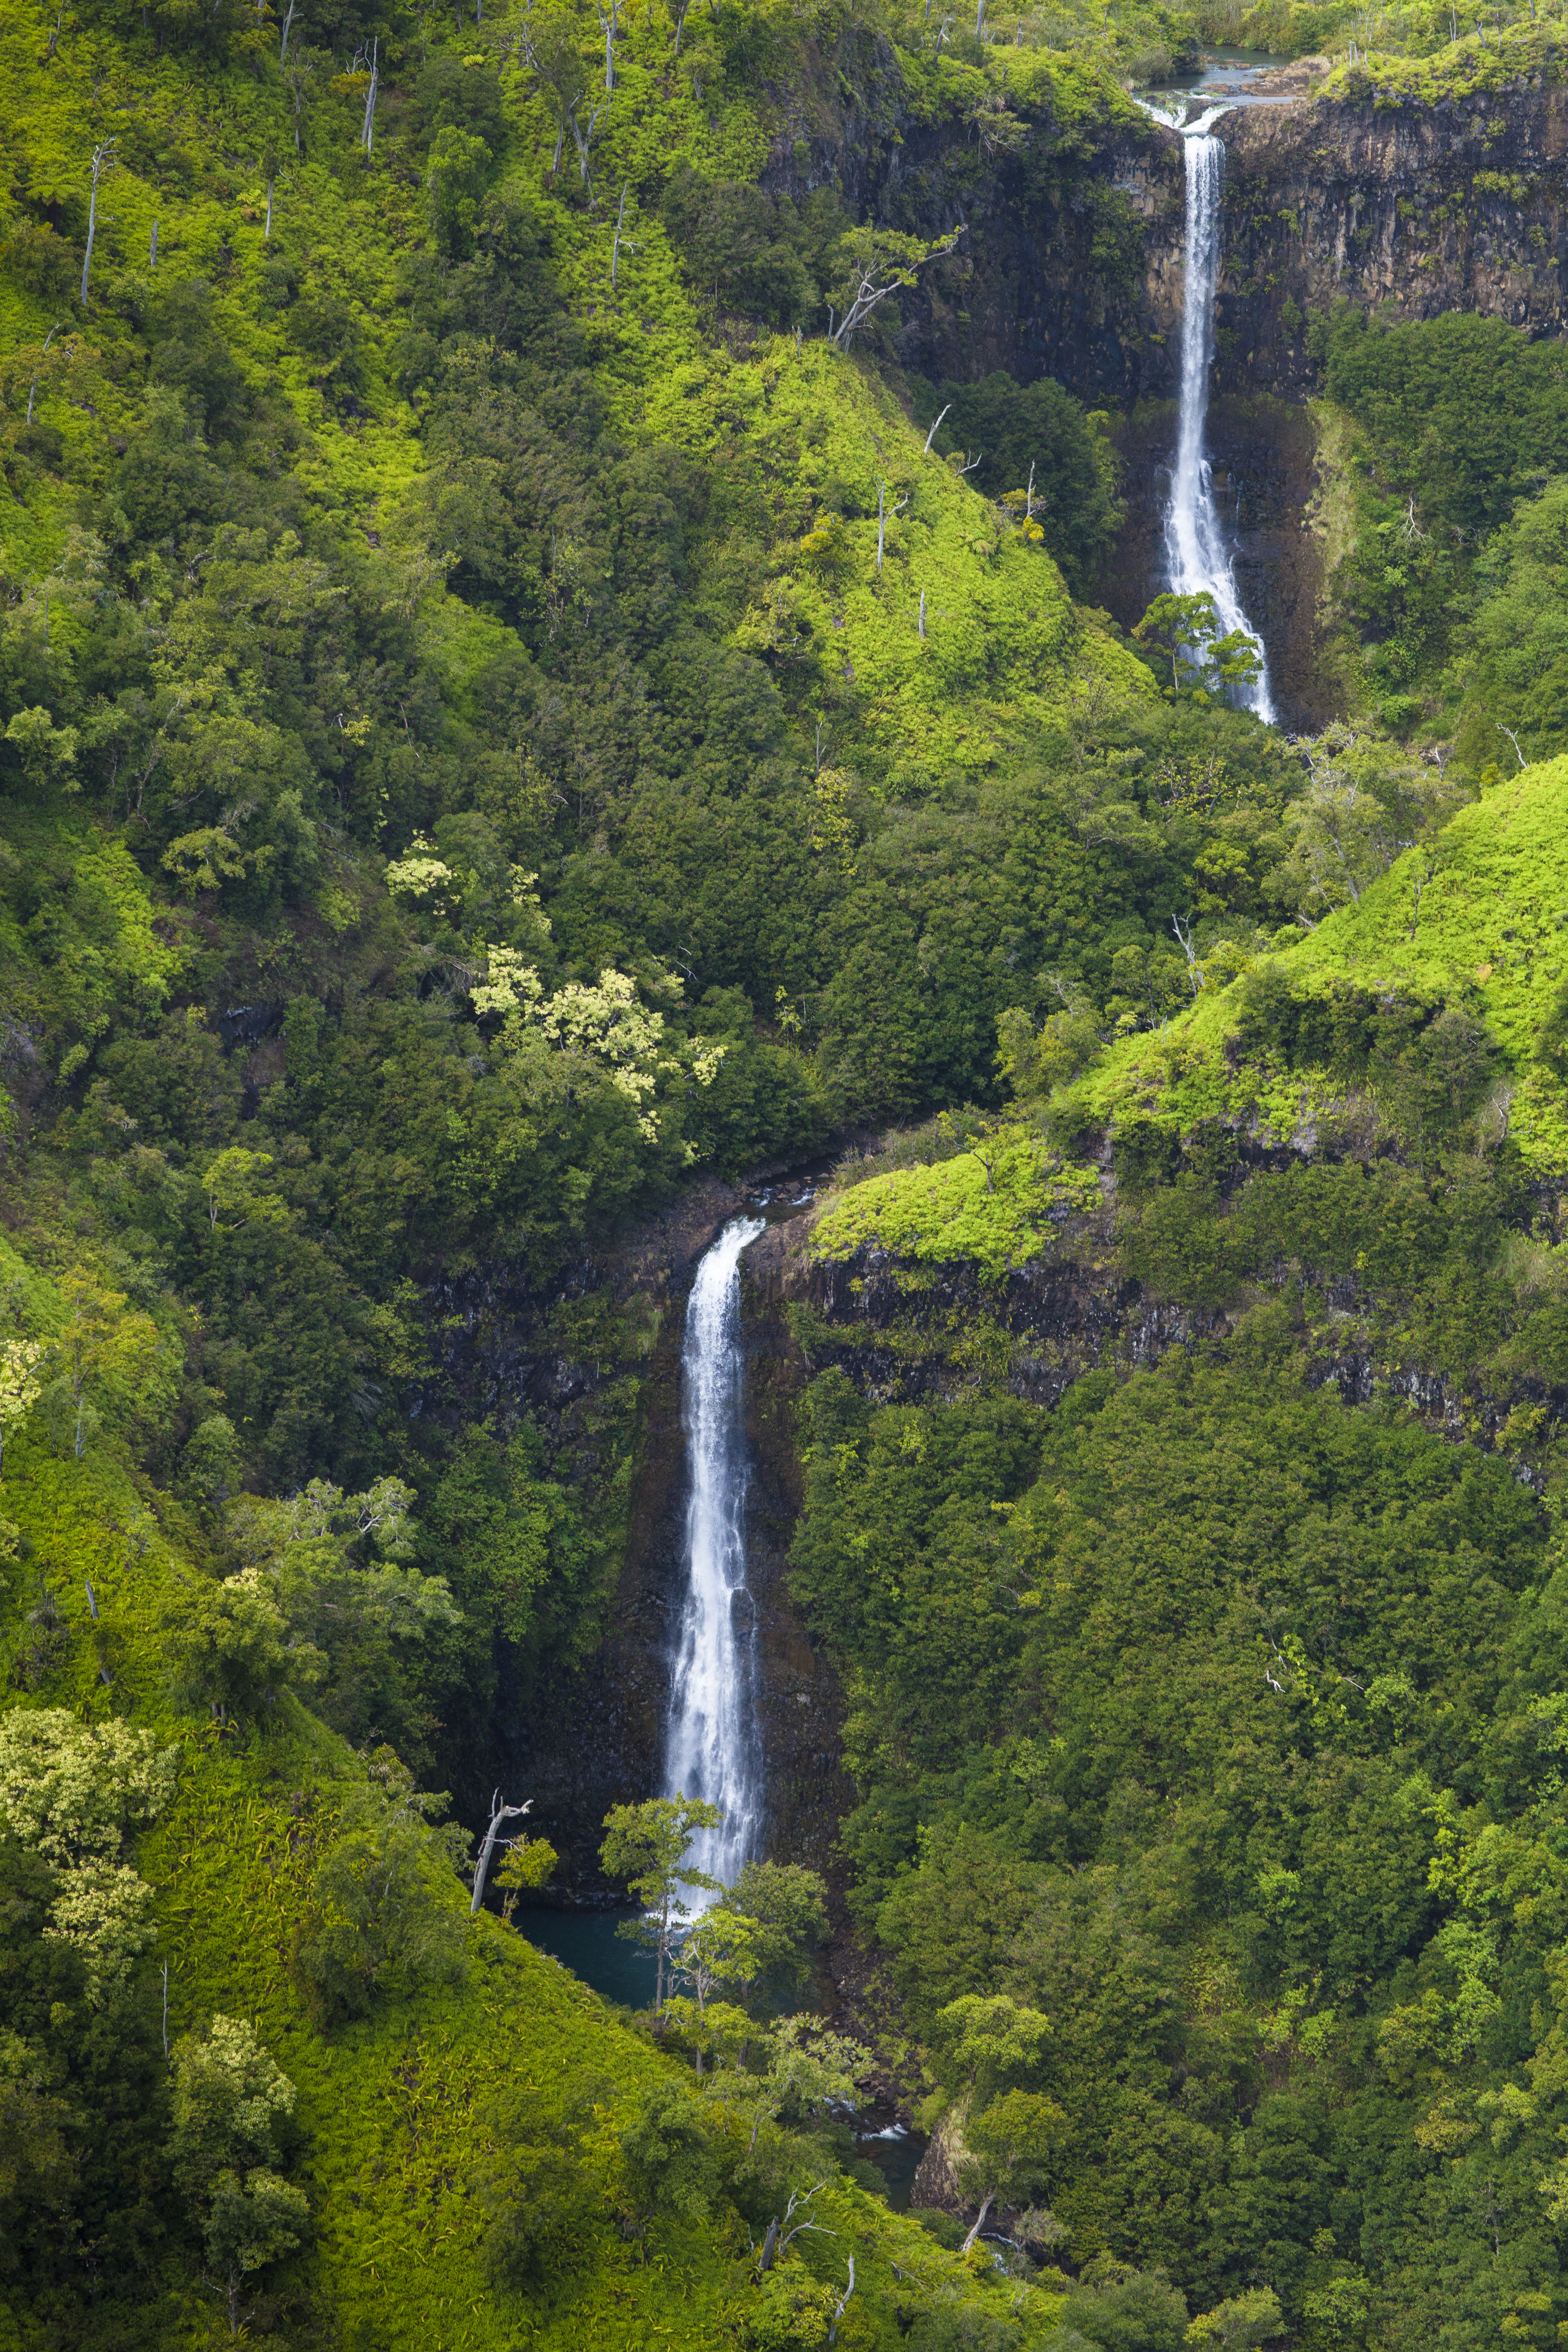 How to move to Kauai | Best Islands to live on Hawaii | Garden Isle